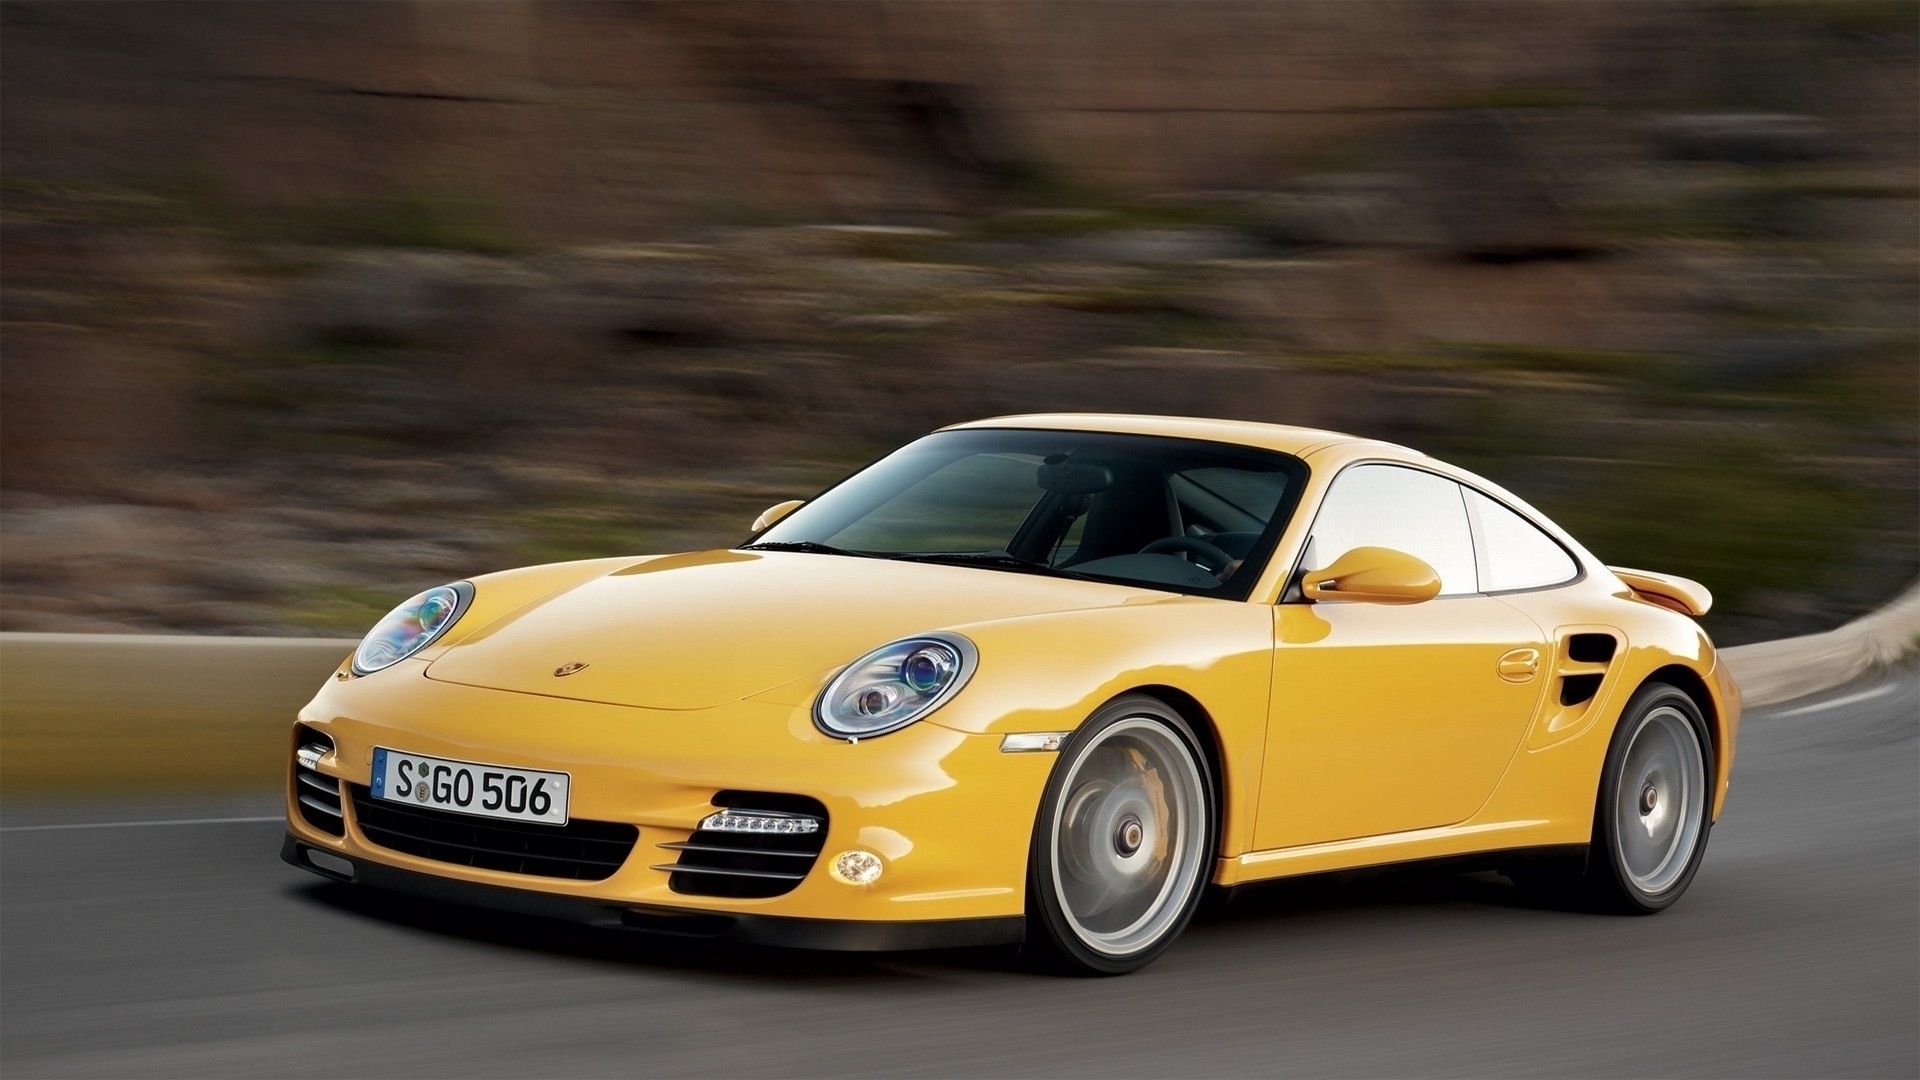 General 1920x1080 Porsche 911 car yellow cars Porsche 997 Porsche vehicle numbers German cars Volkswagen Group